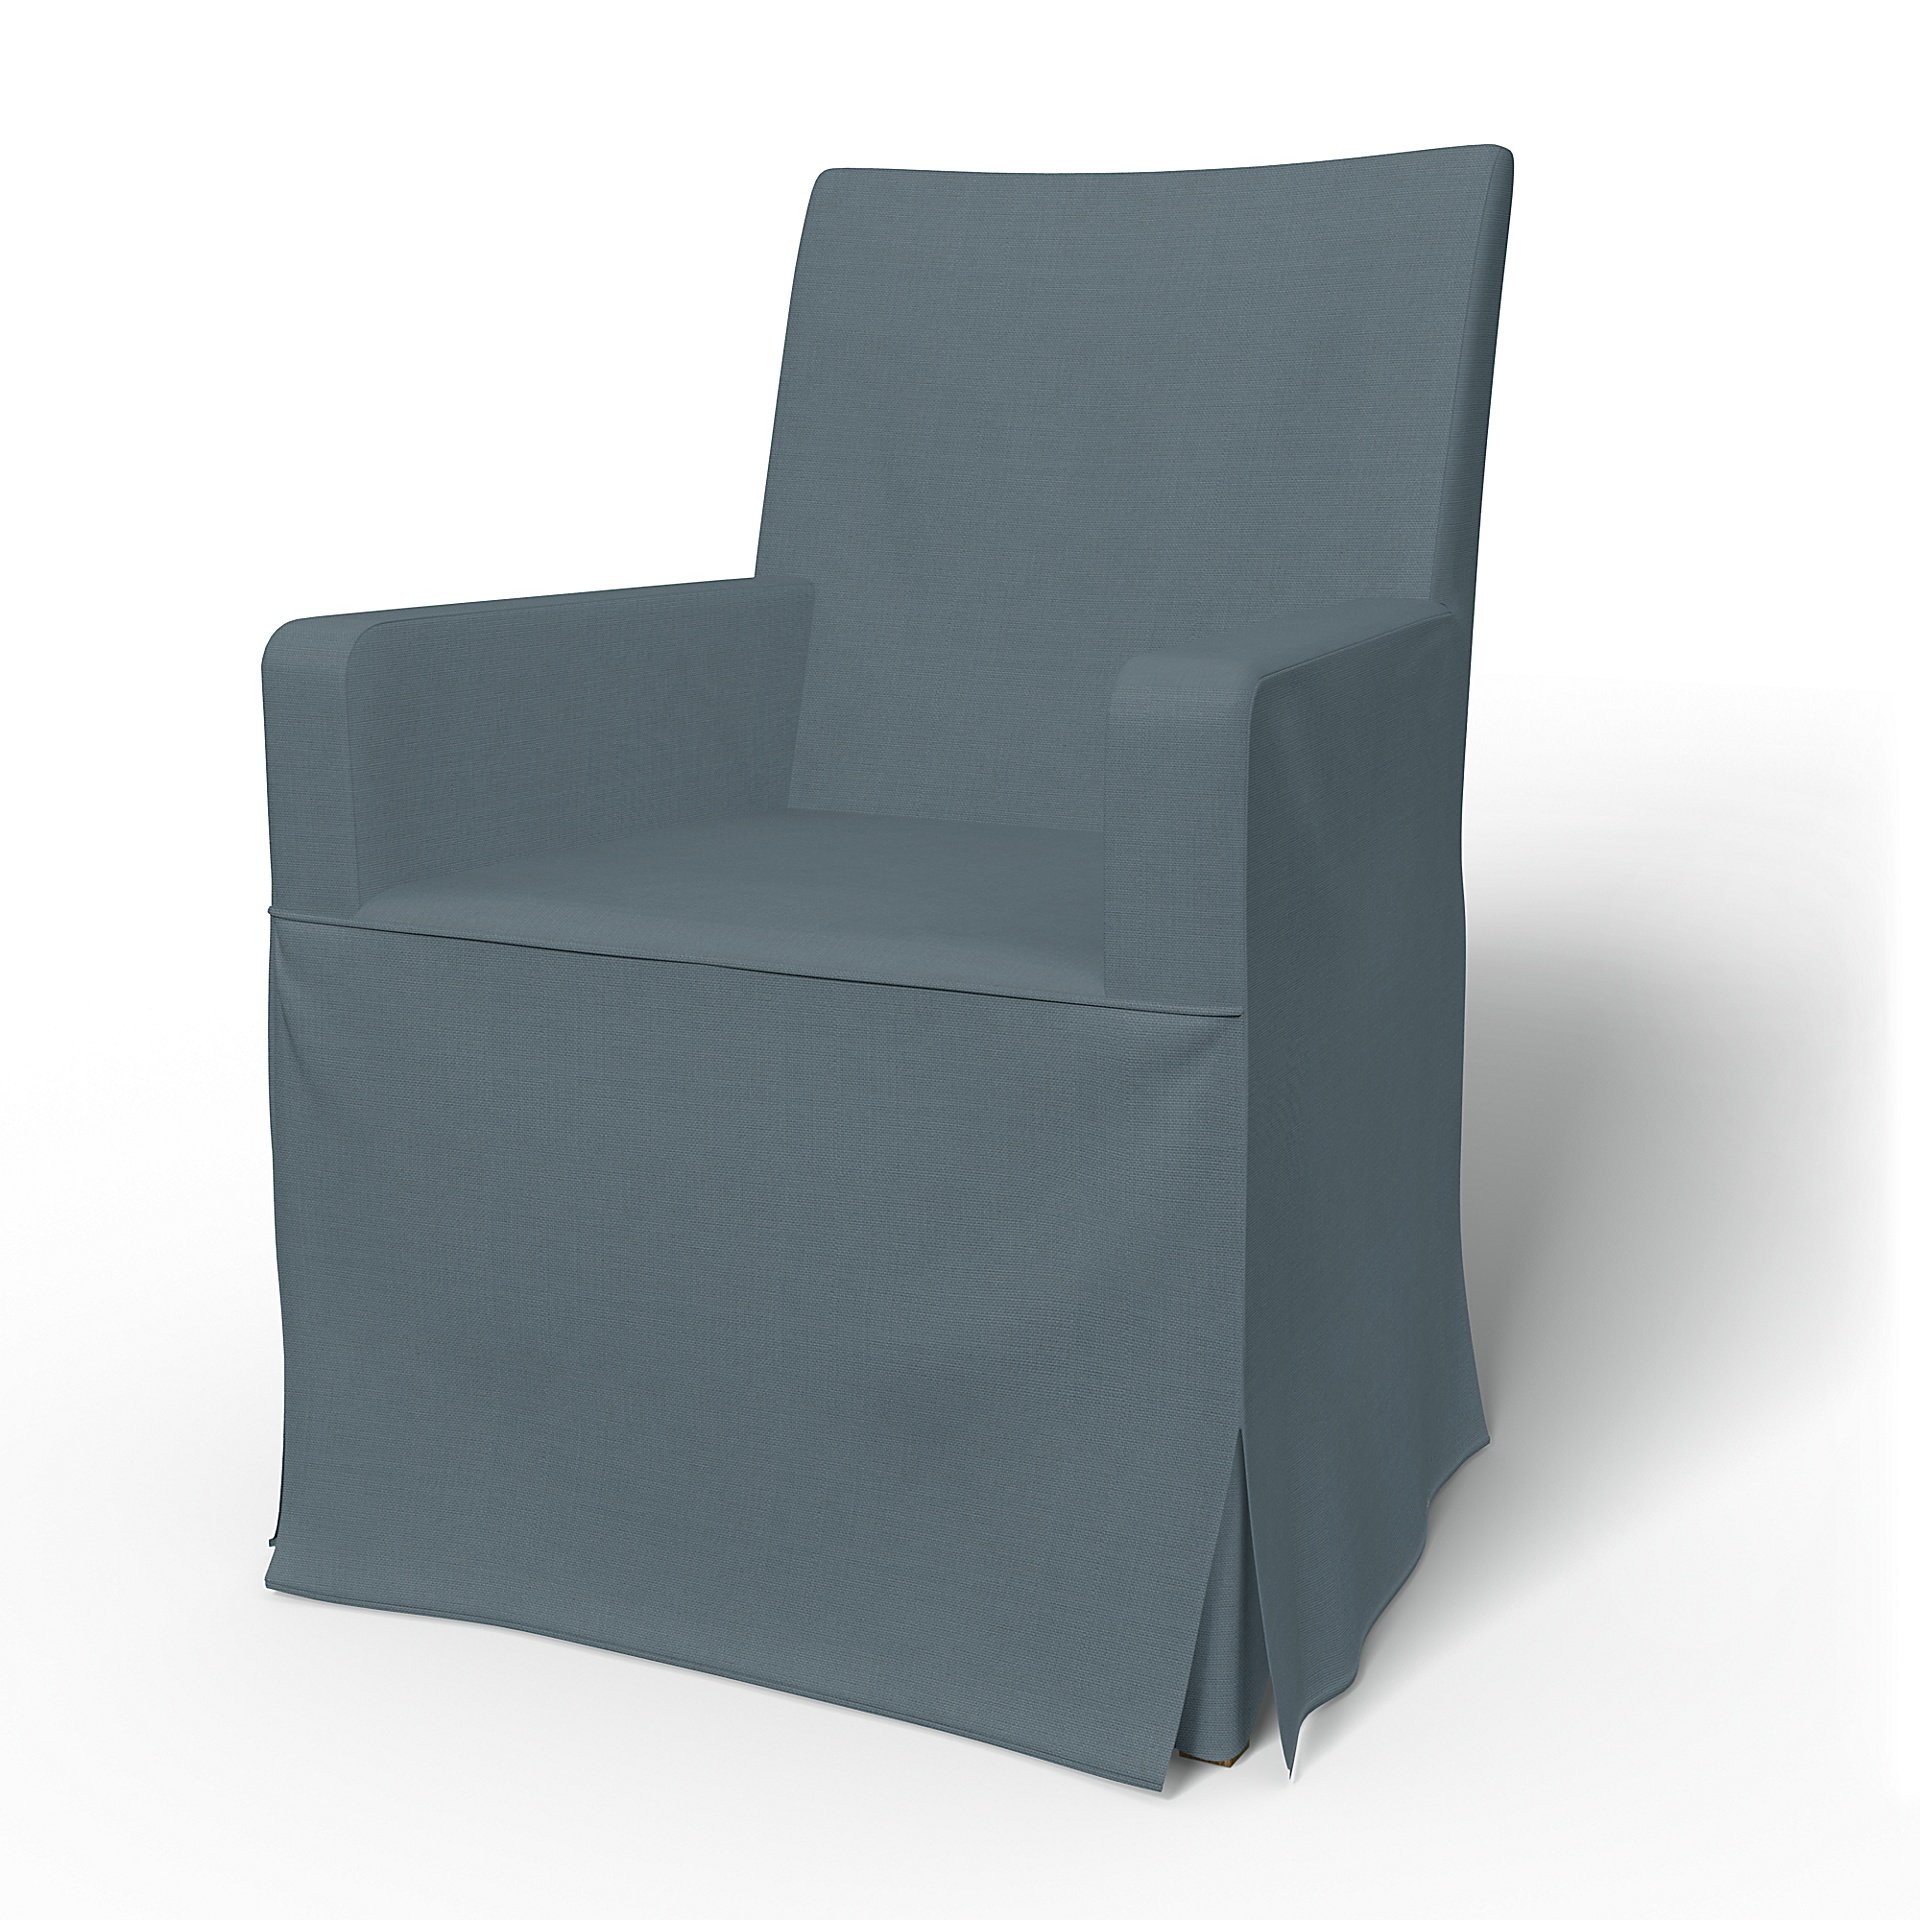 IKEA - Henriksdal, Chair cover w/ armrests, long skirt box pleat, Sky Blue, Outdoor - Bemz